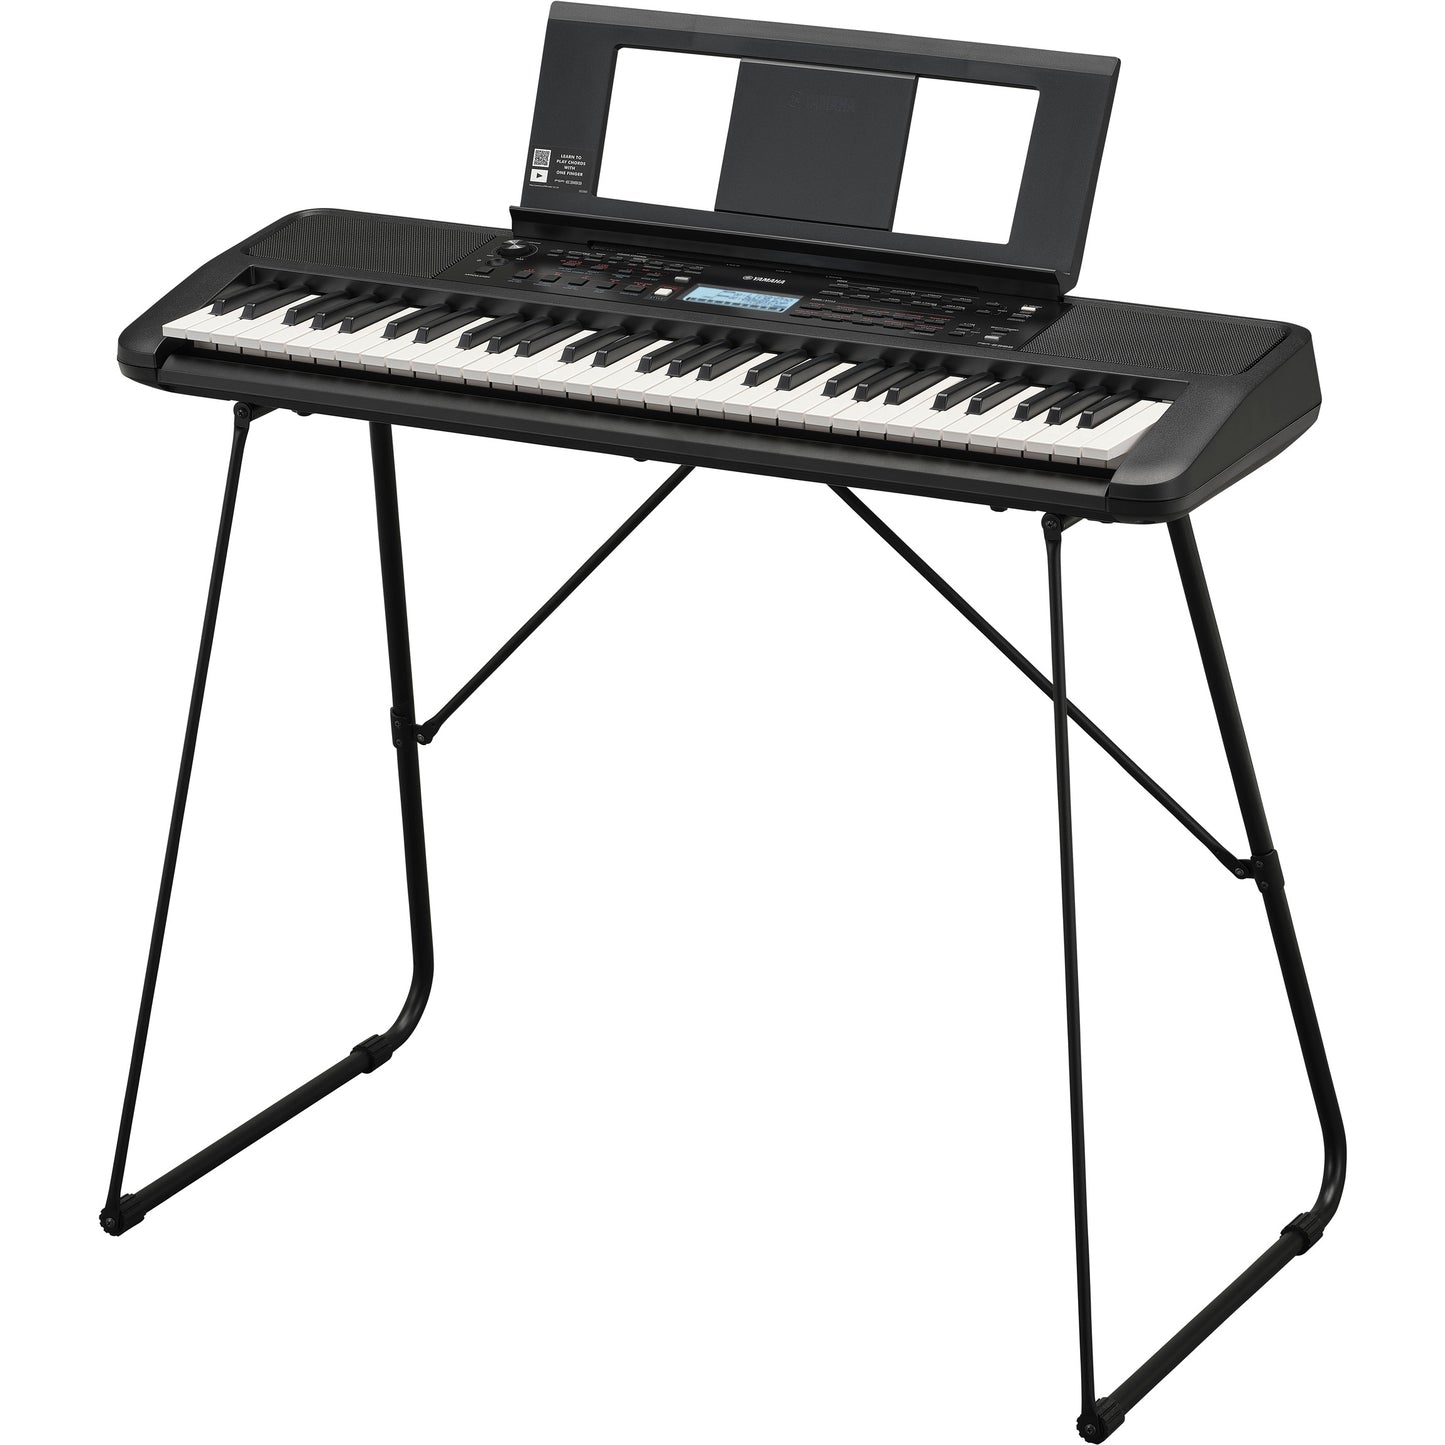 Yamaha PSRE383 61-Key Mid-Range Portable Keyboard